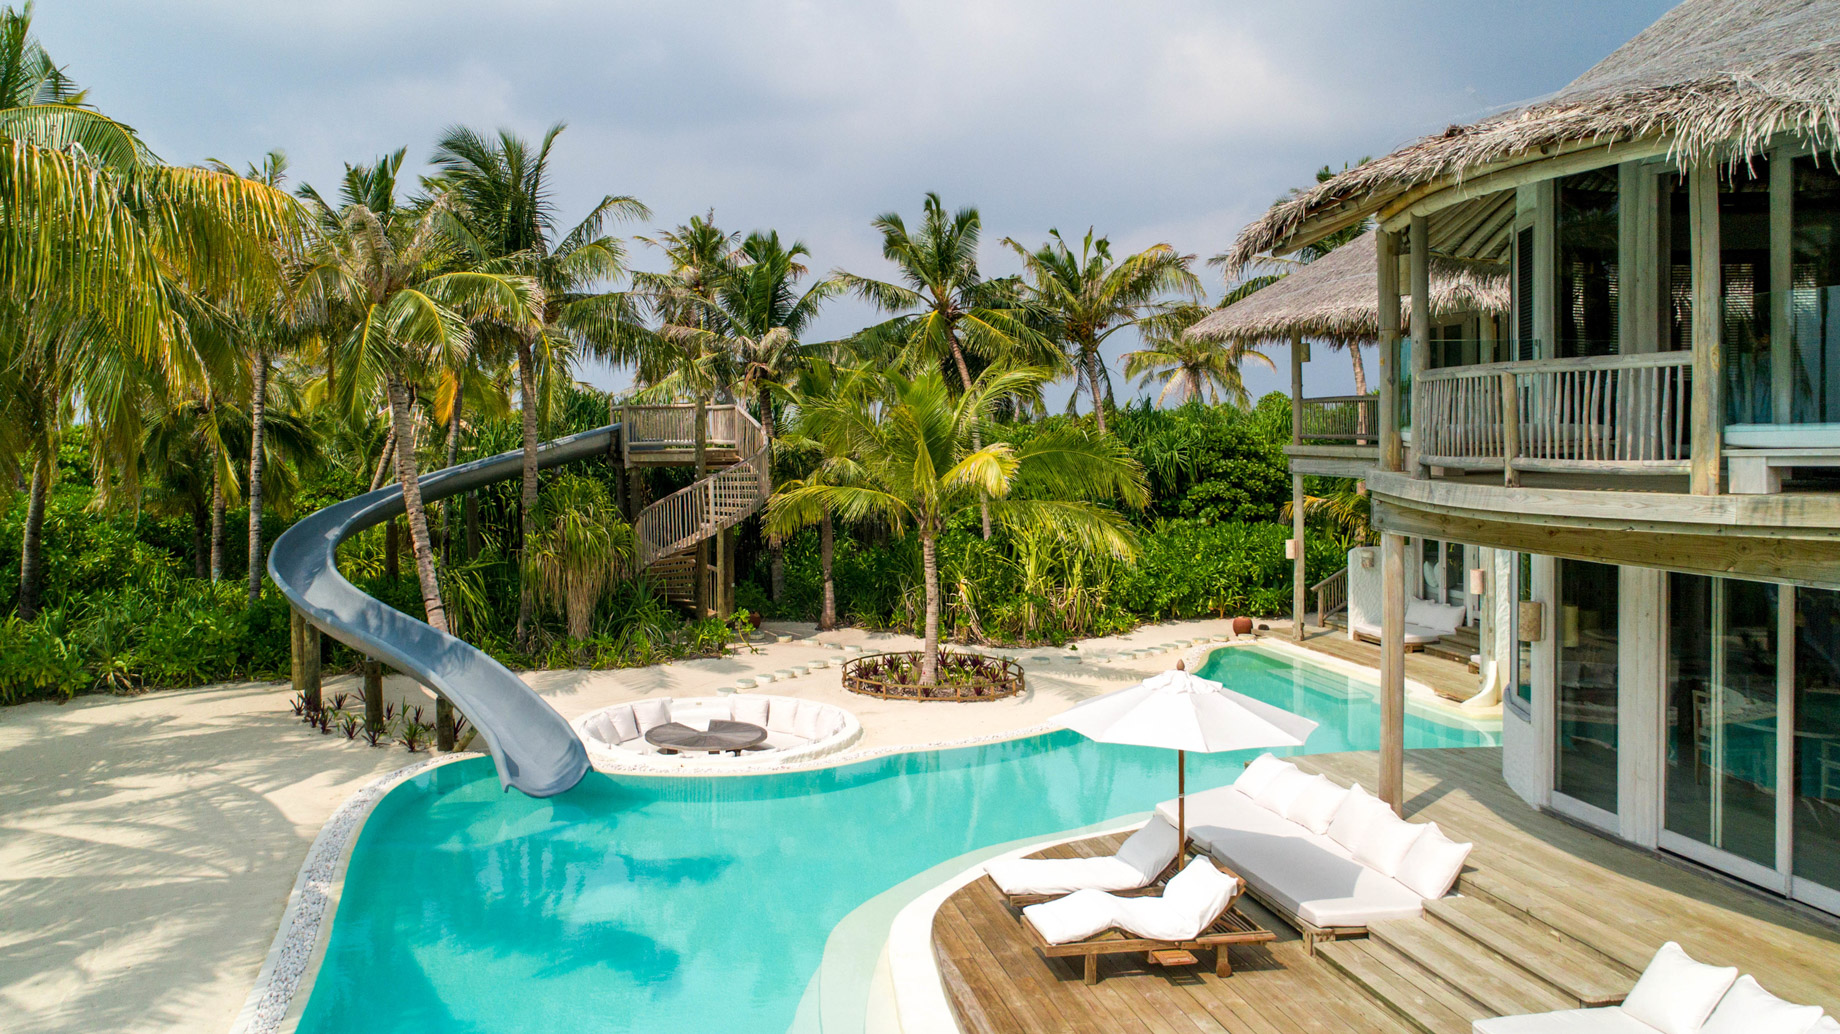 Soneva Jani Resort – Noonu Atoll, Medhufaru, Maldives – 4 Bedroom Island Reserve Villa Pool Deck Water Slide